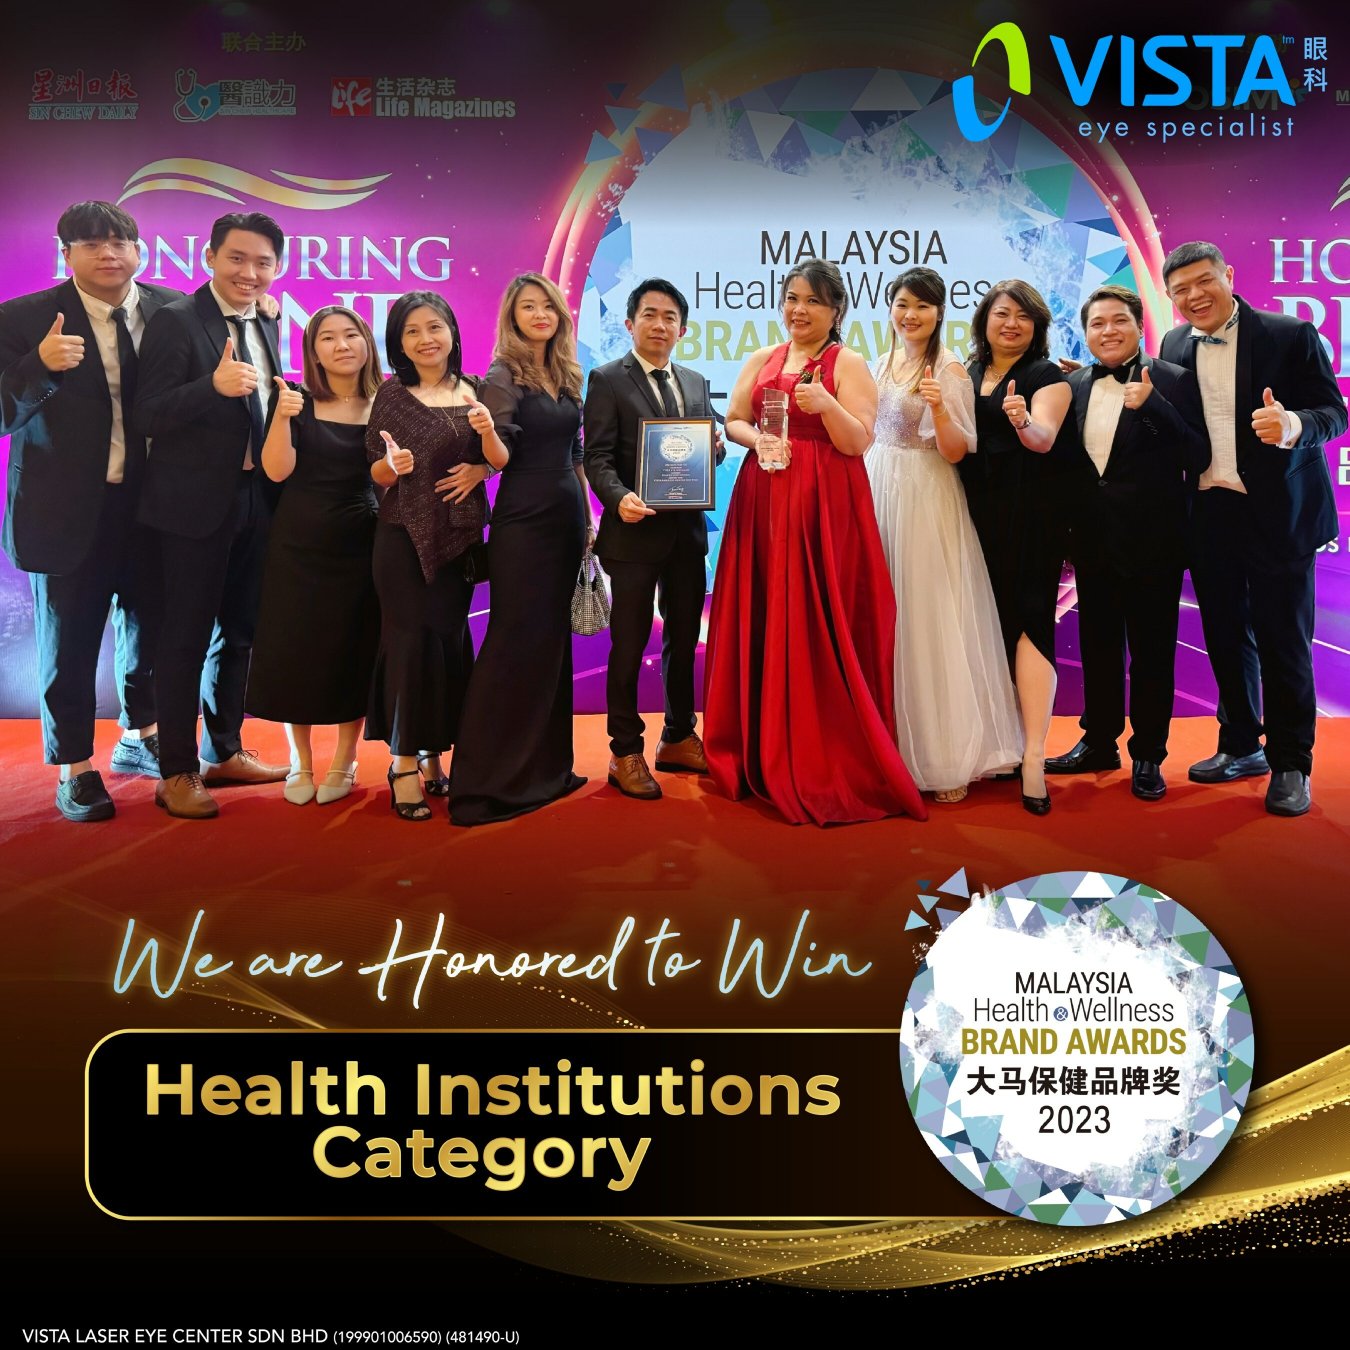 VISTA Eye Specialist clinches Health and Wellness Brand Award